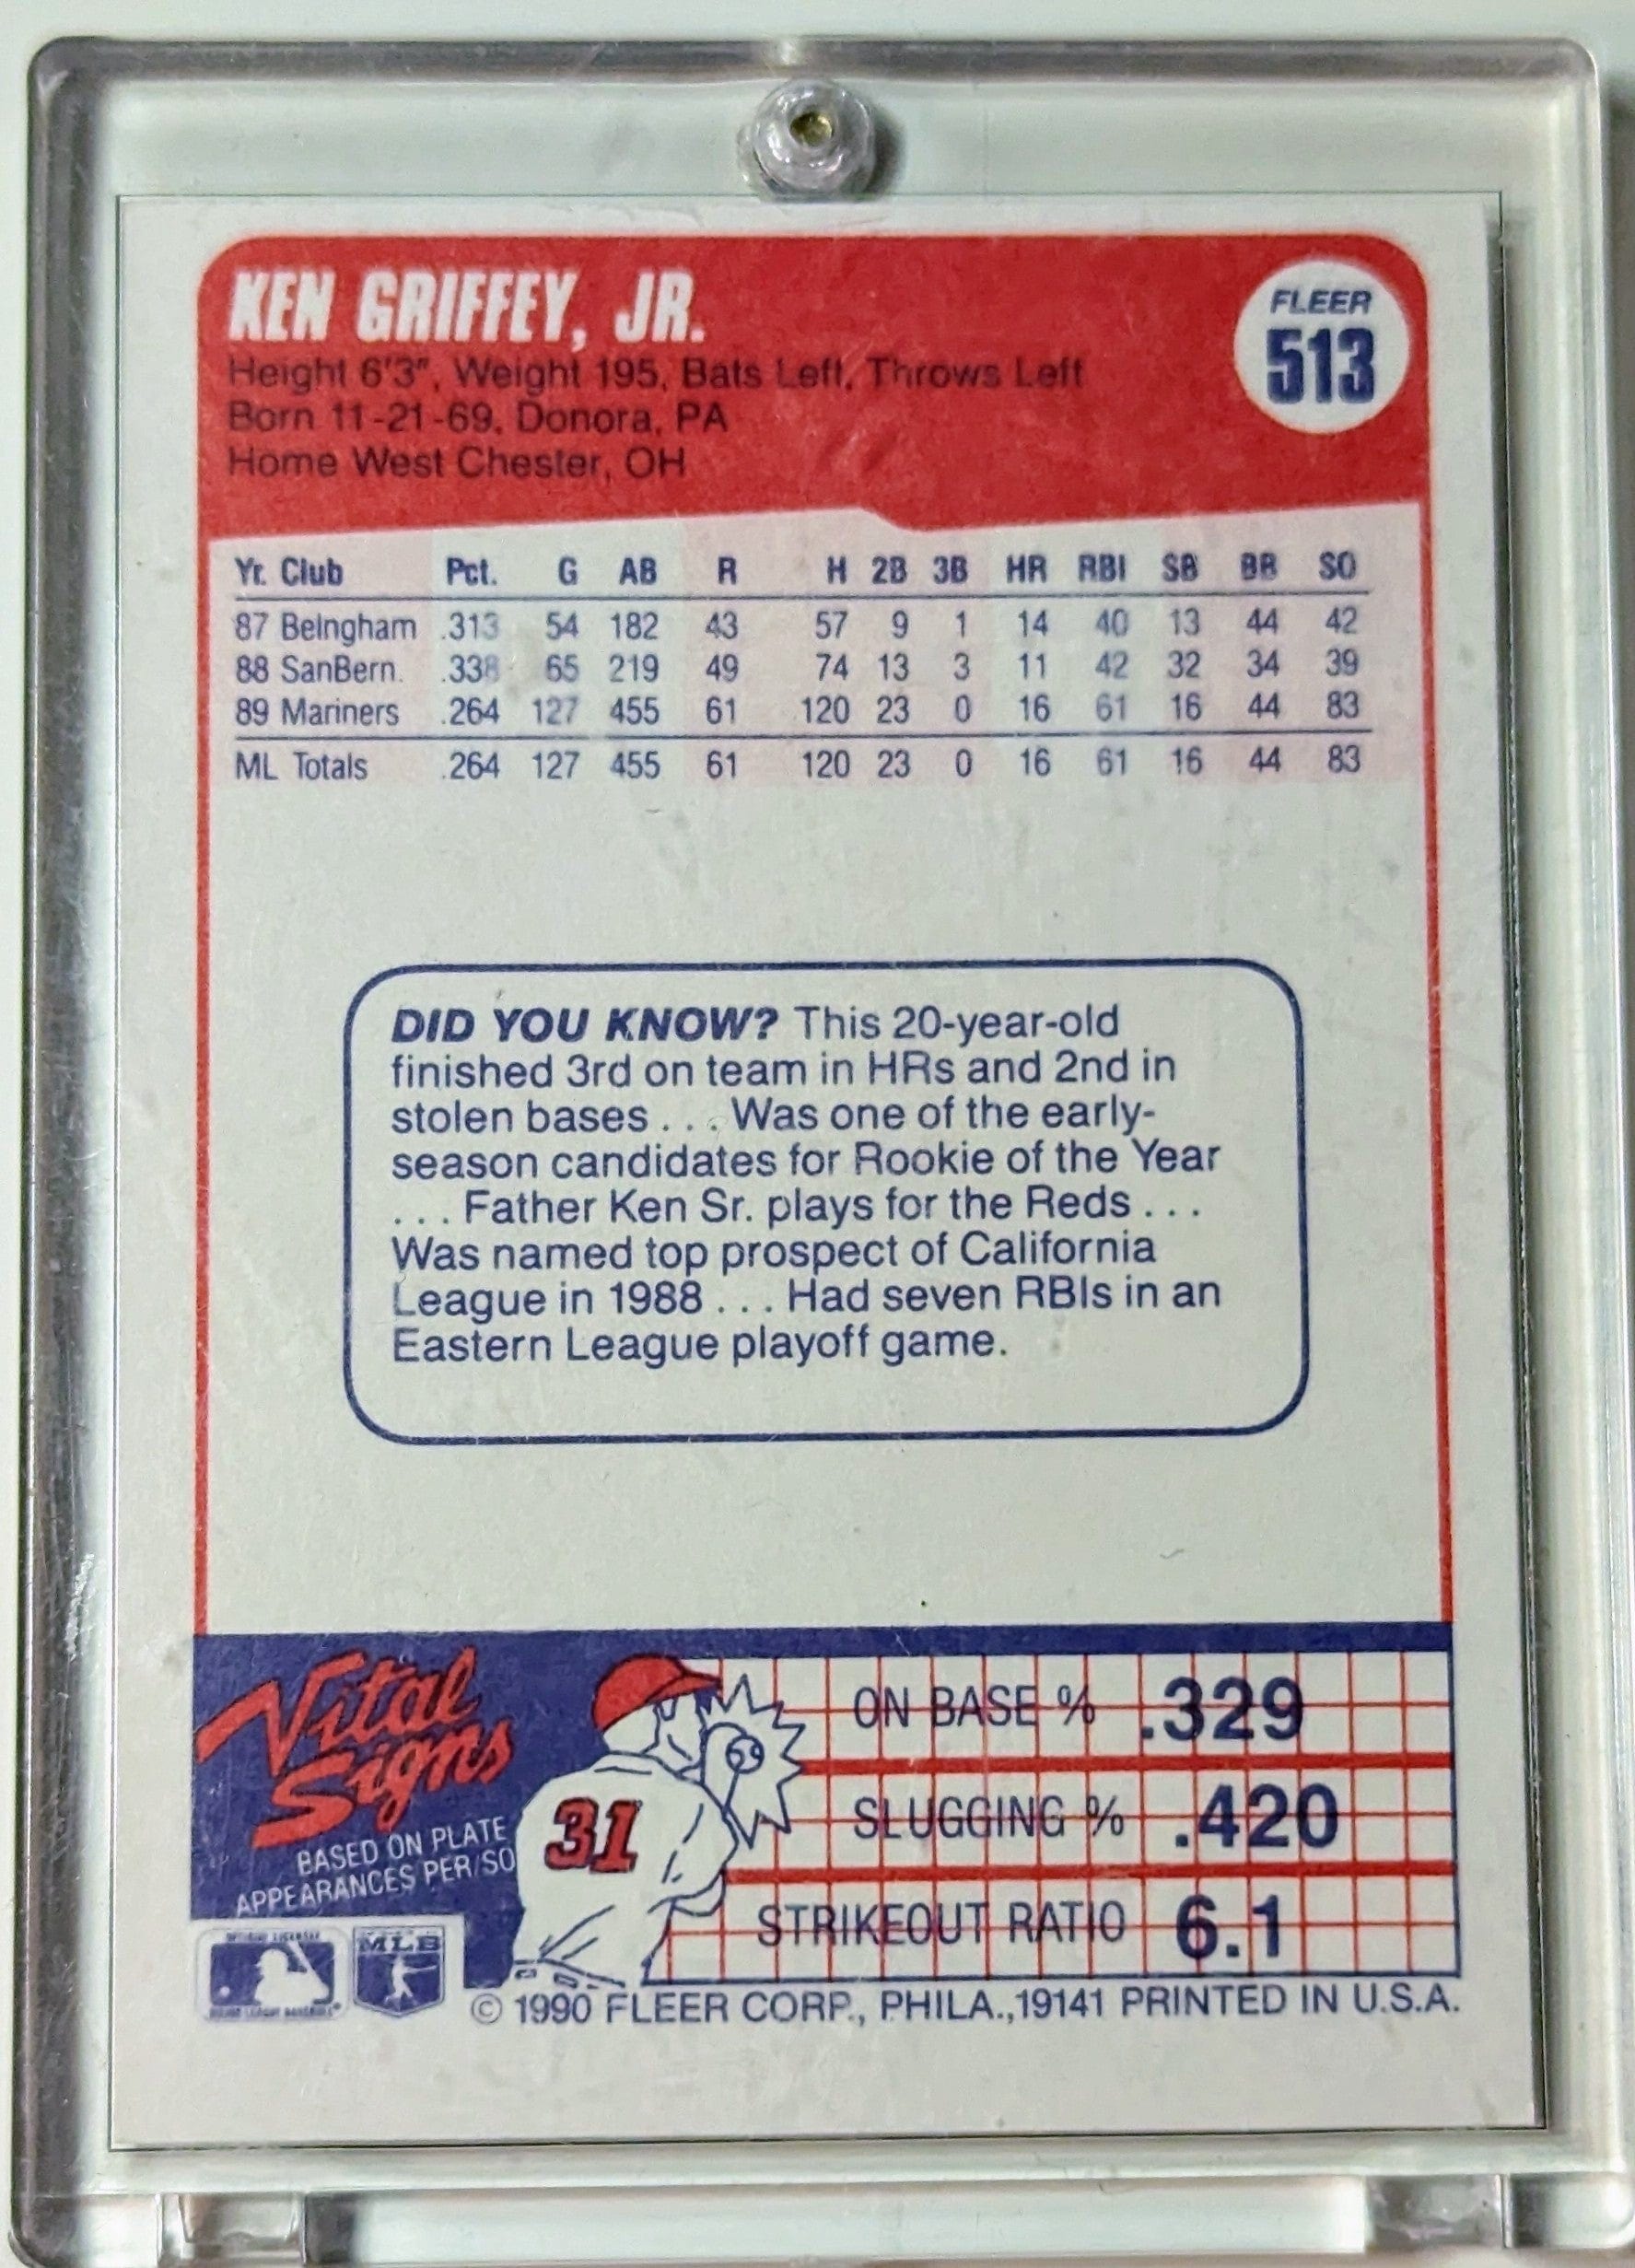 FIINR Baseball Card 1990 Fleer Ken Griffey Jr. MLB Baseball Error Card - Blue Dot Error Card - Mint Condition